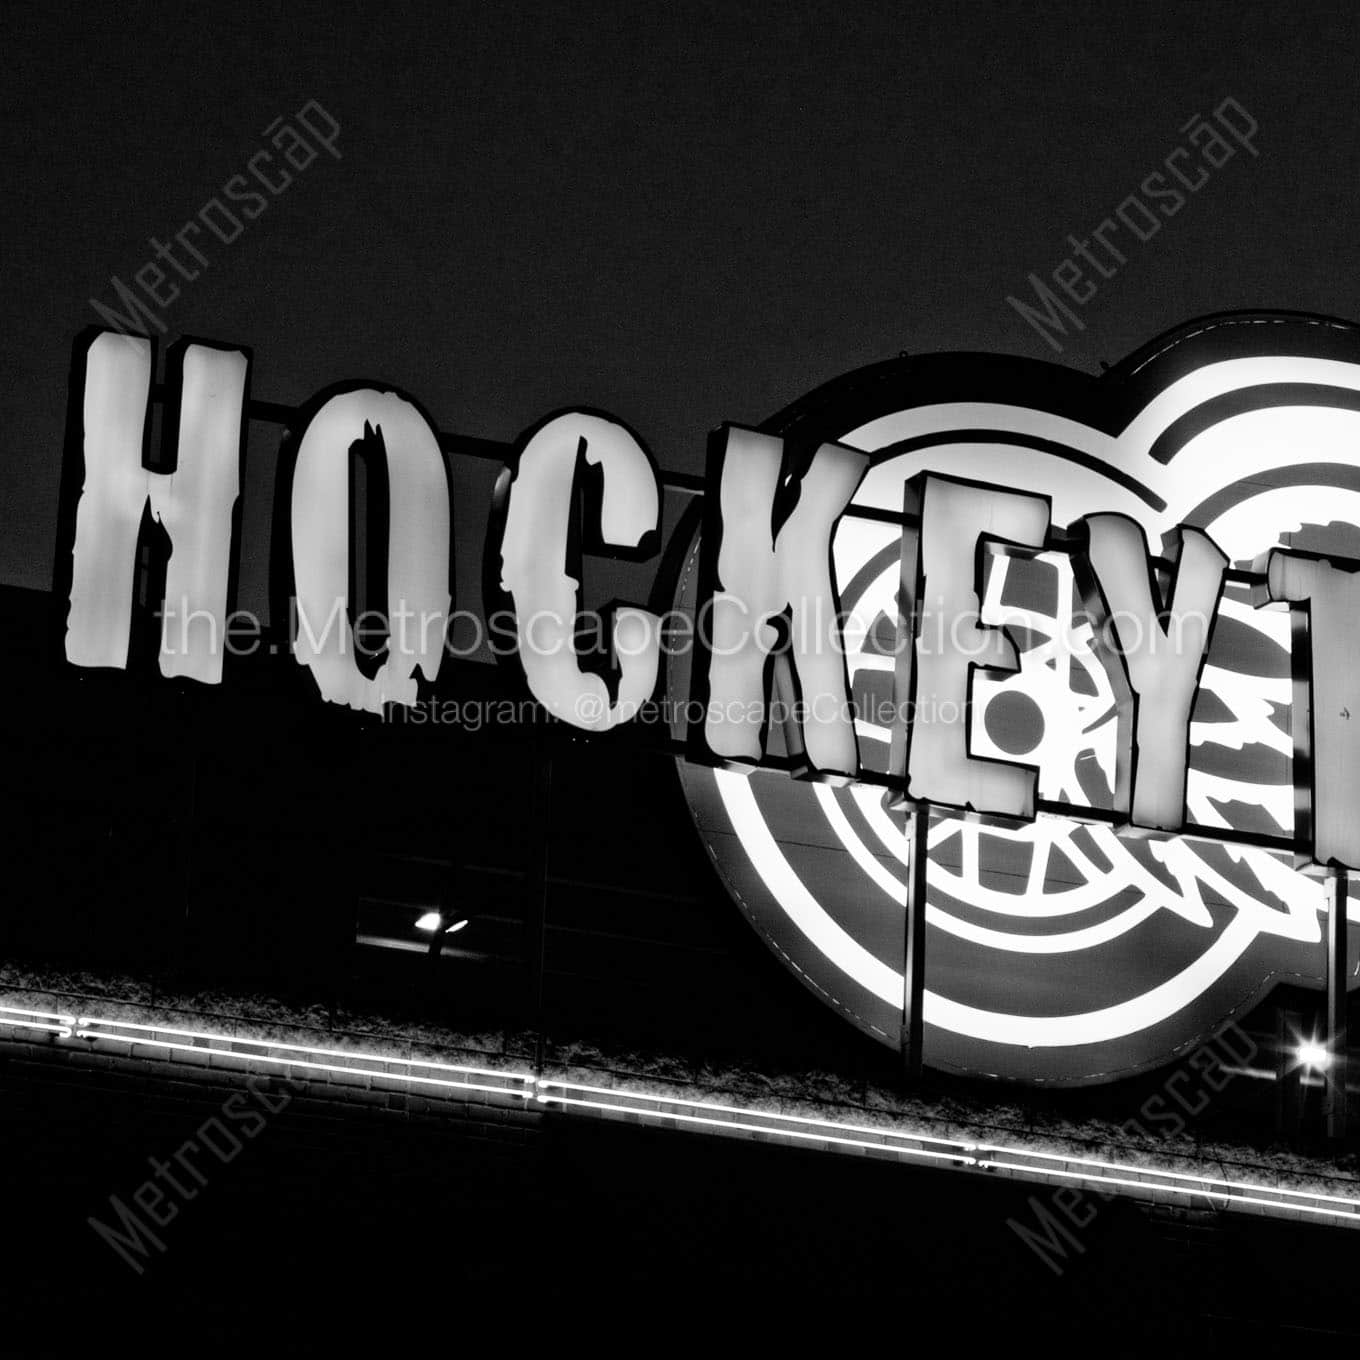 hockeytown bar Black & White Wall Art